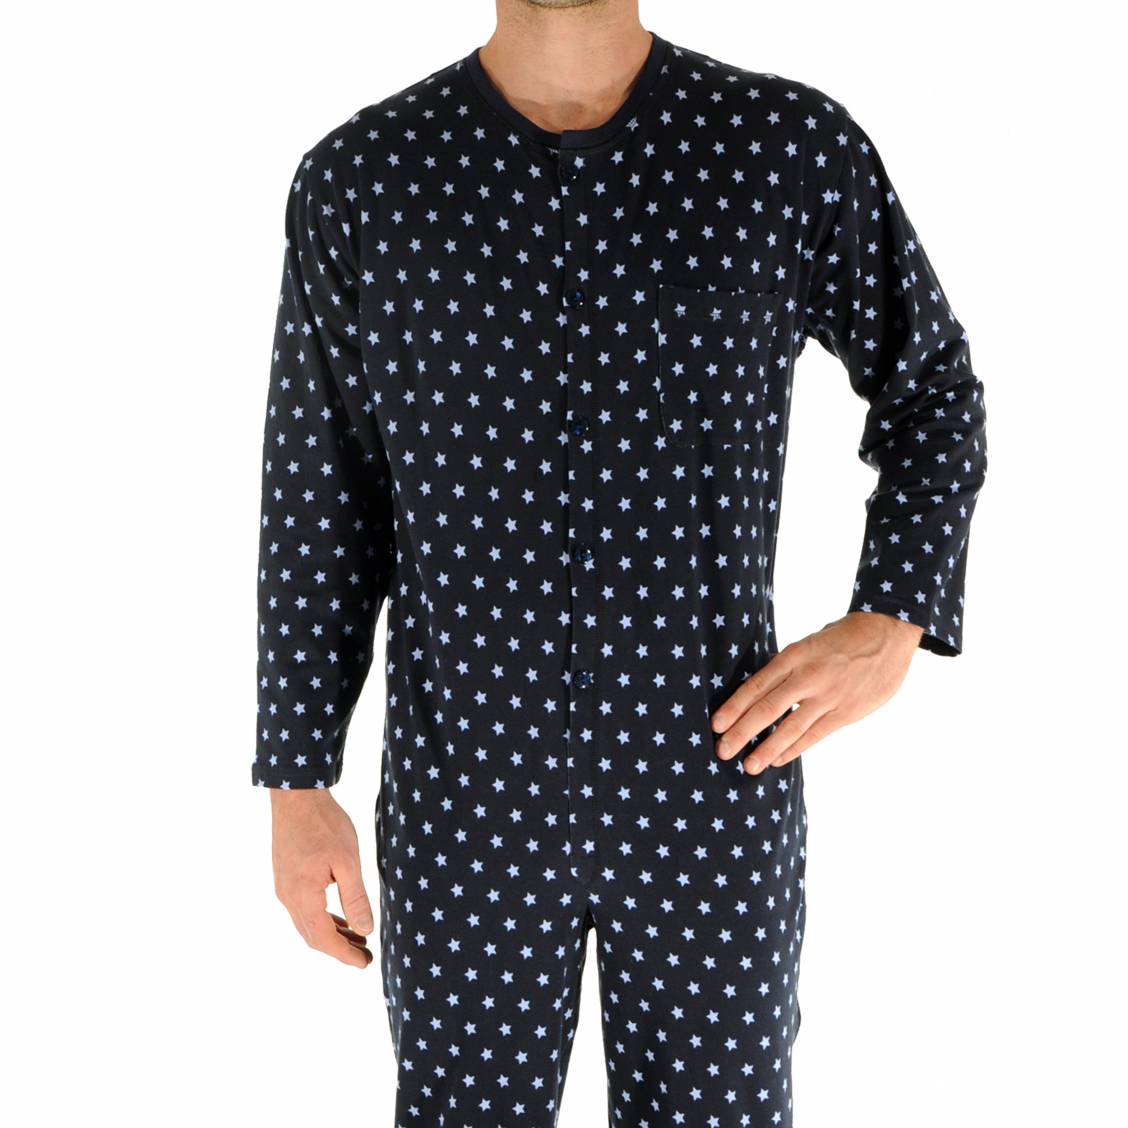 Grenouillère homme pyjama